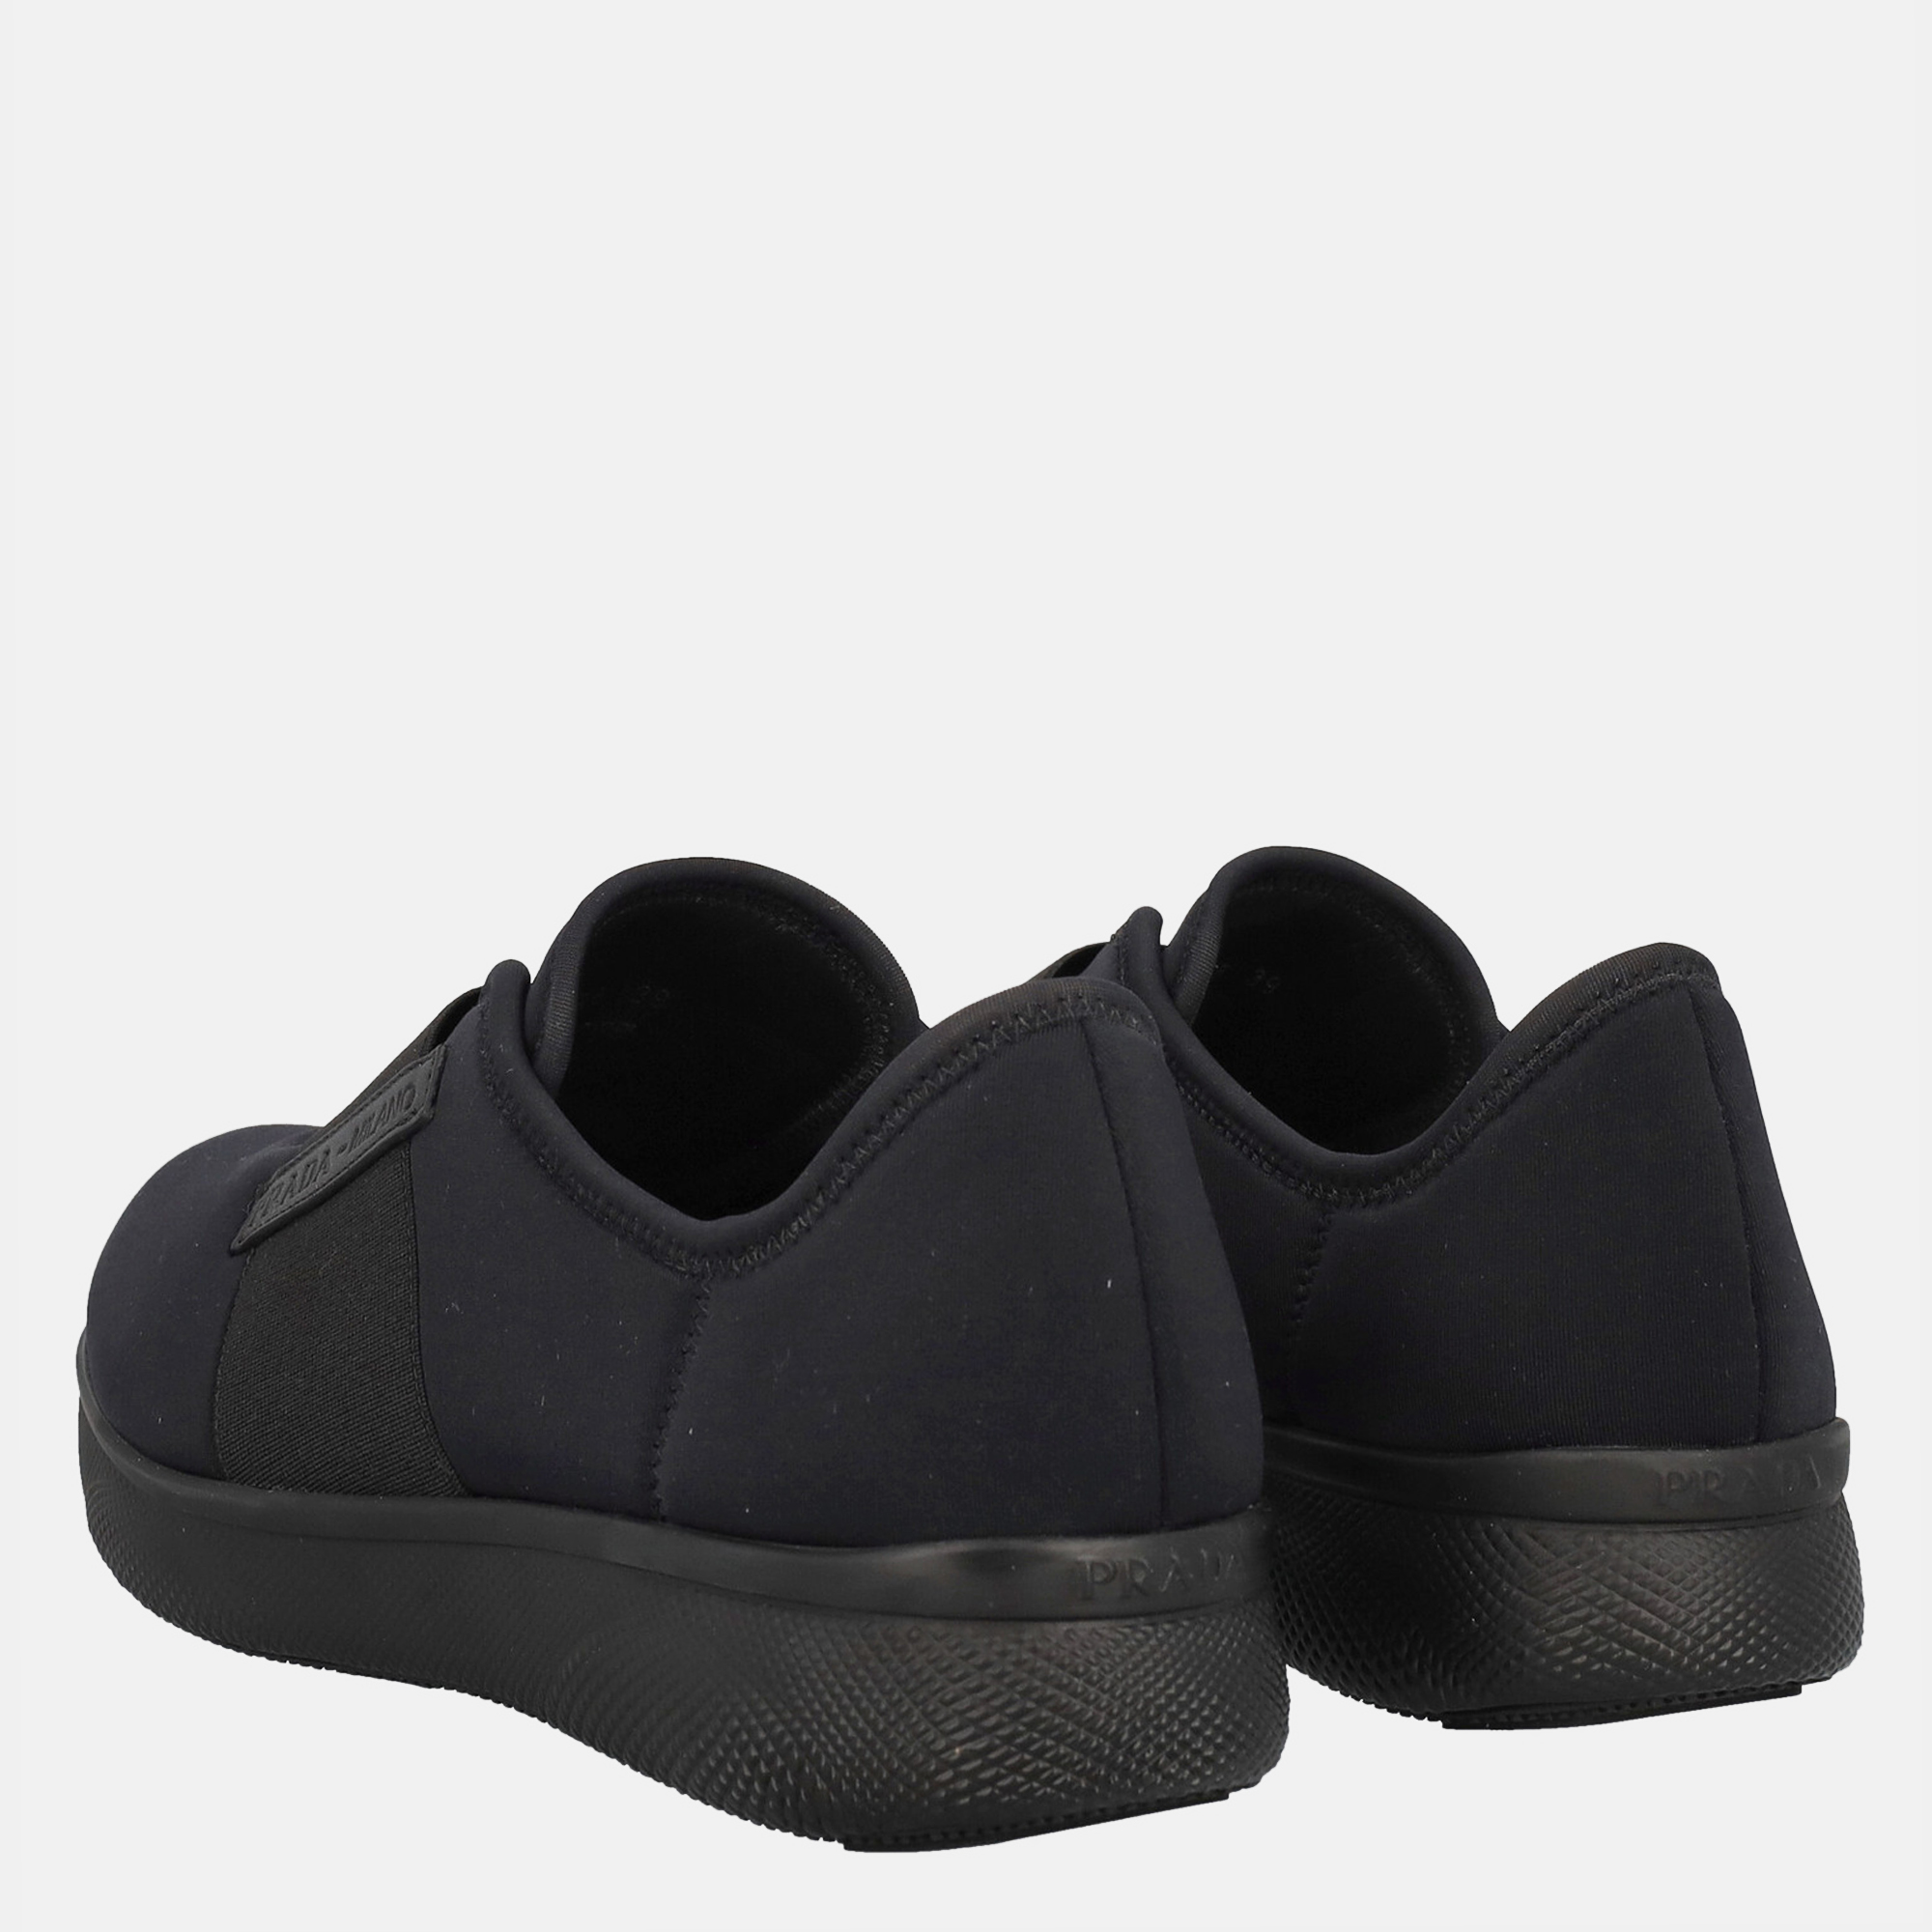 Prada  Women's Fabric Sneakers - Black - EU 39